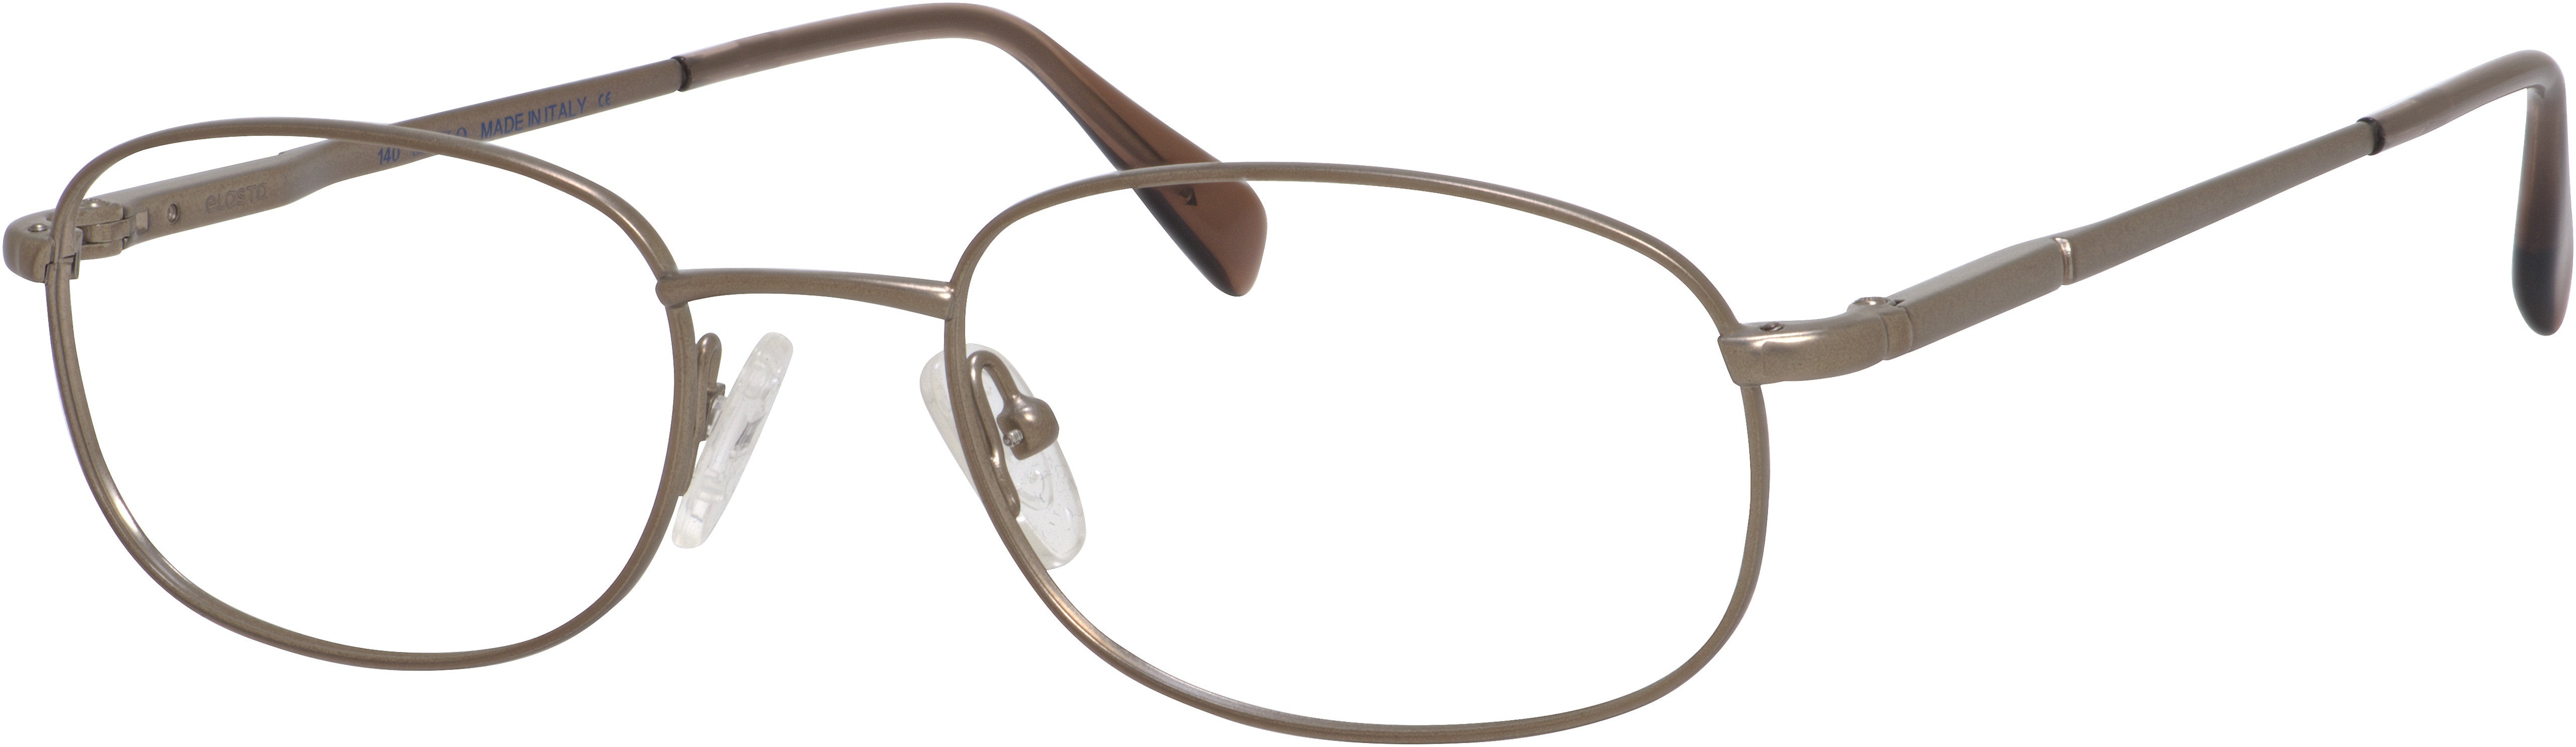  Elasta 7058 Rectangular Eyeglasses 0R50-0R50  Gold Ash (00 Demo Lens)